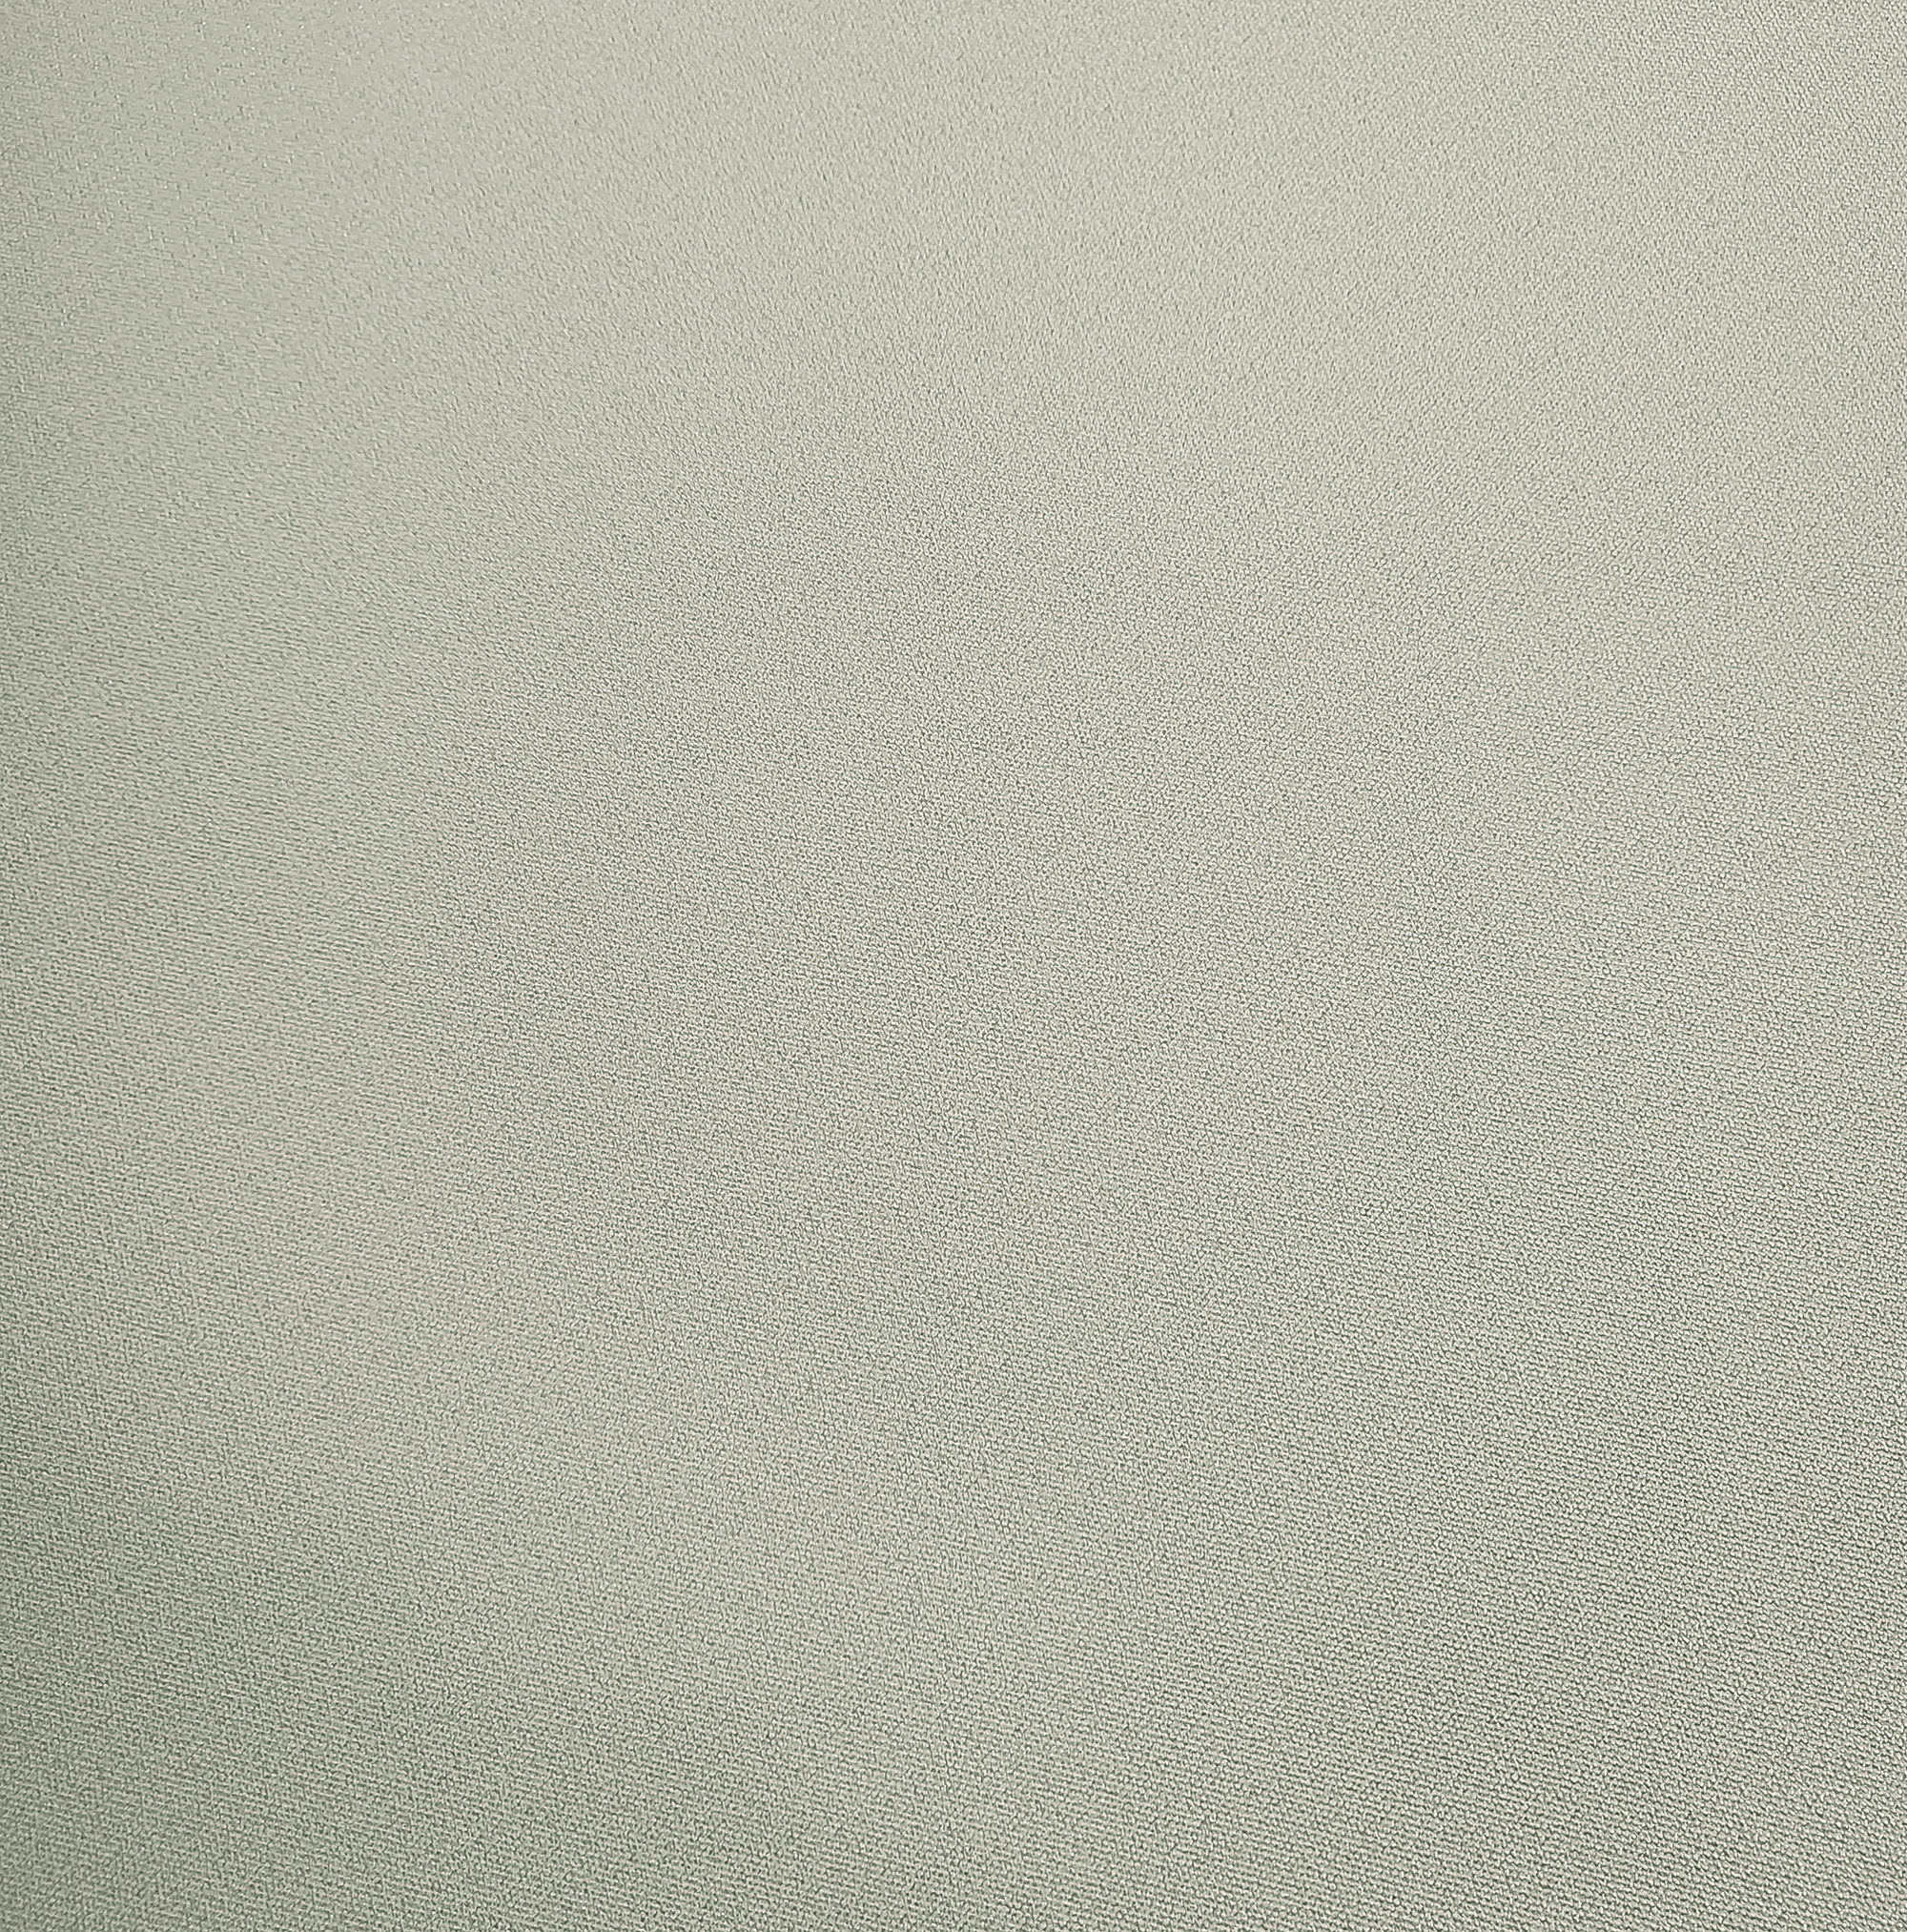 Image of Holden Decor Allora Texture Sage Wallpaper - 10.05m x 53cm